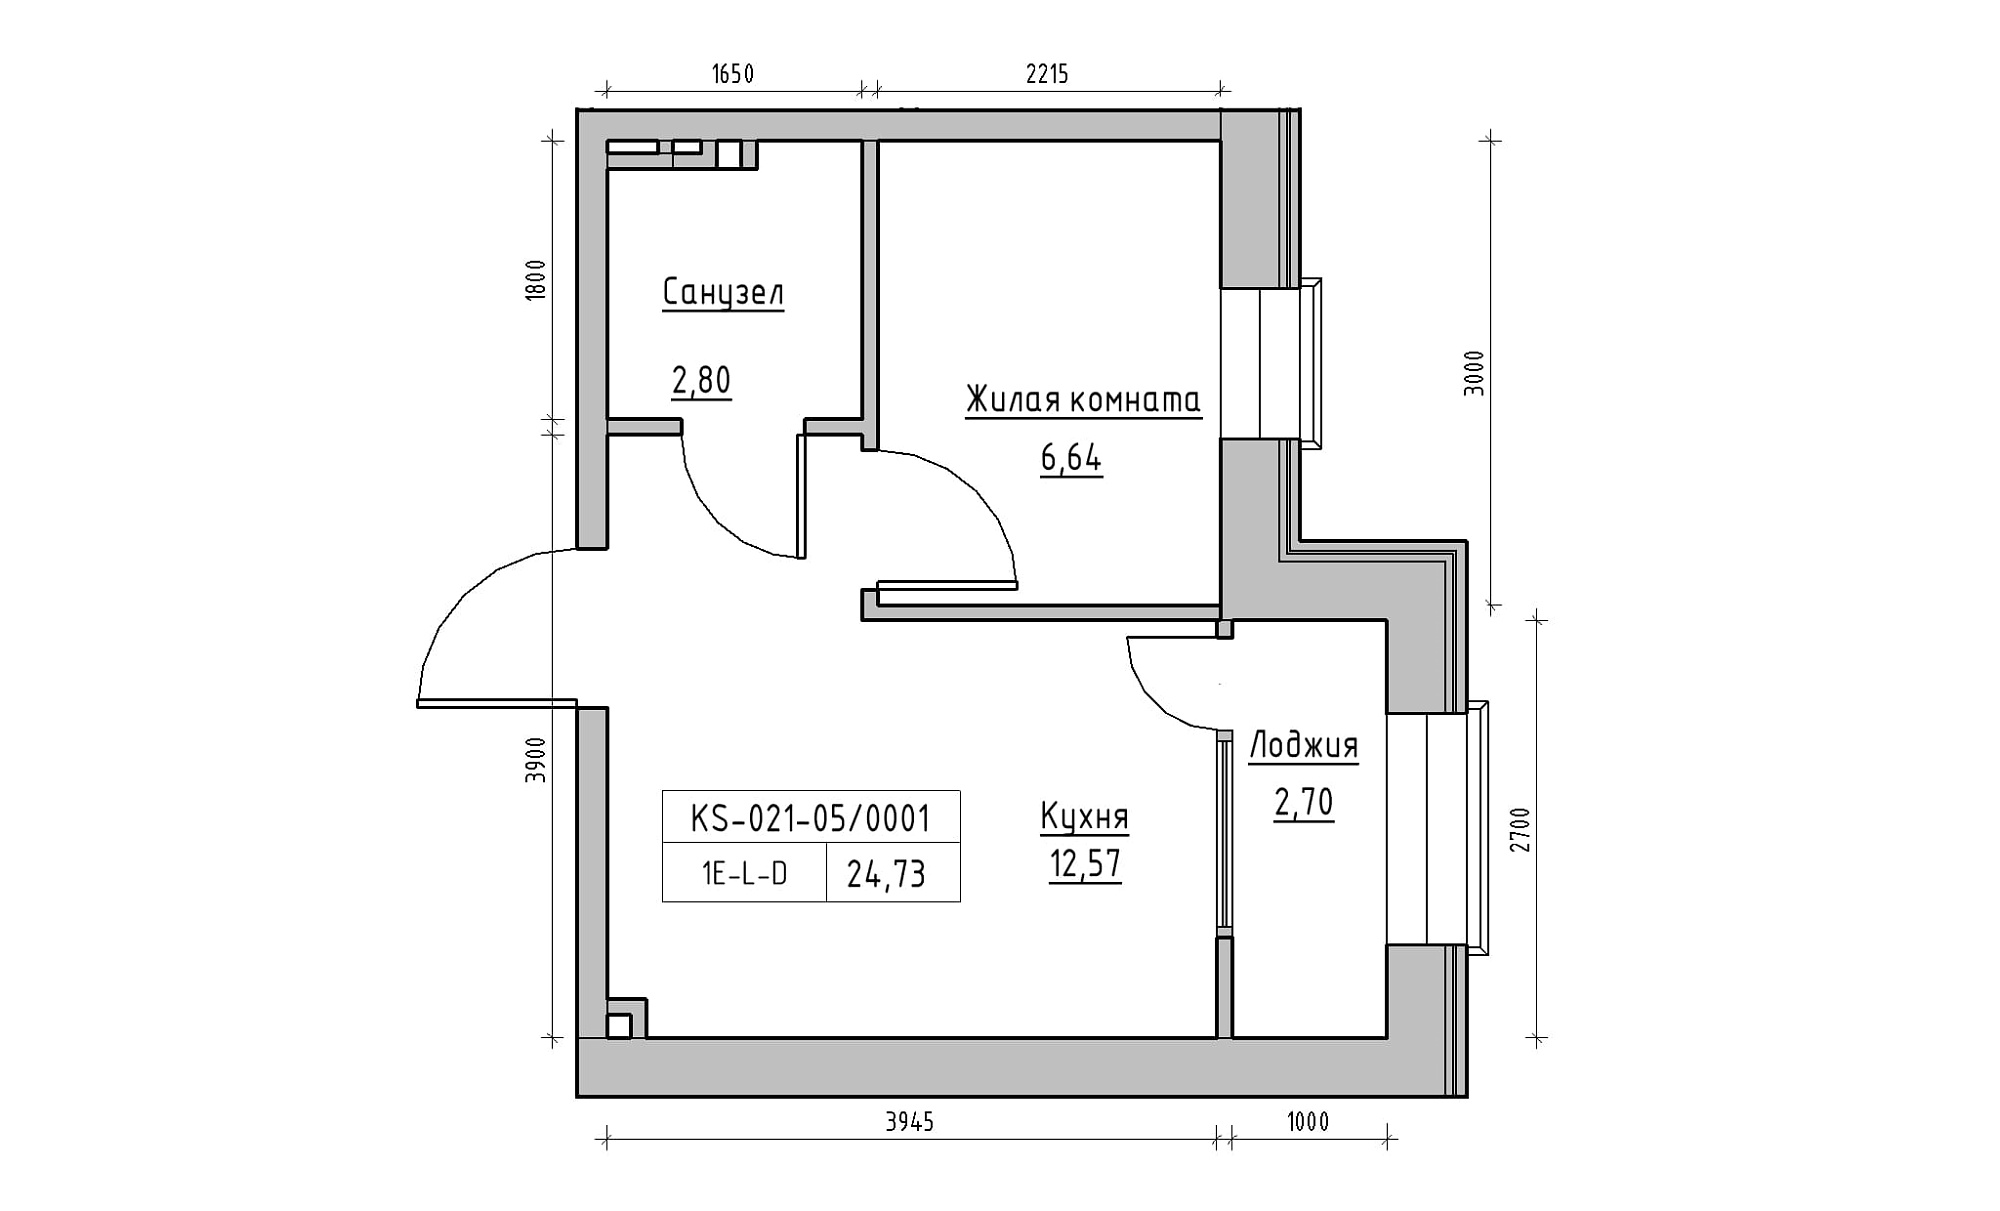 Planning 1-rm flats area 24.73m2, KS-021-05/0001.